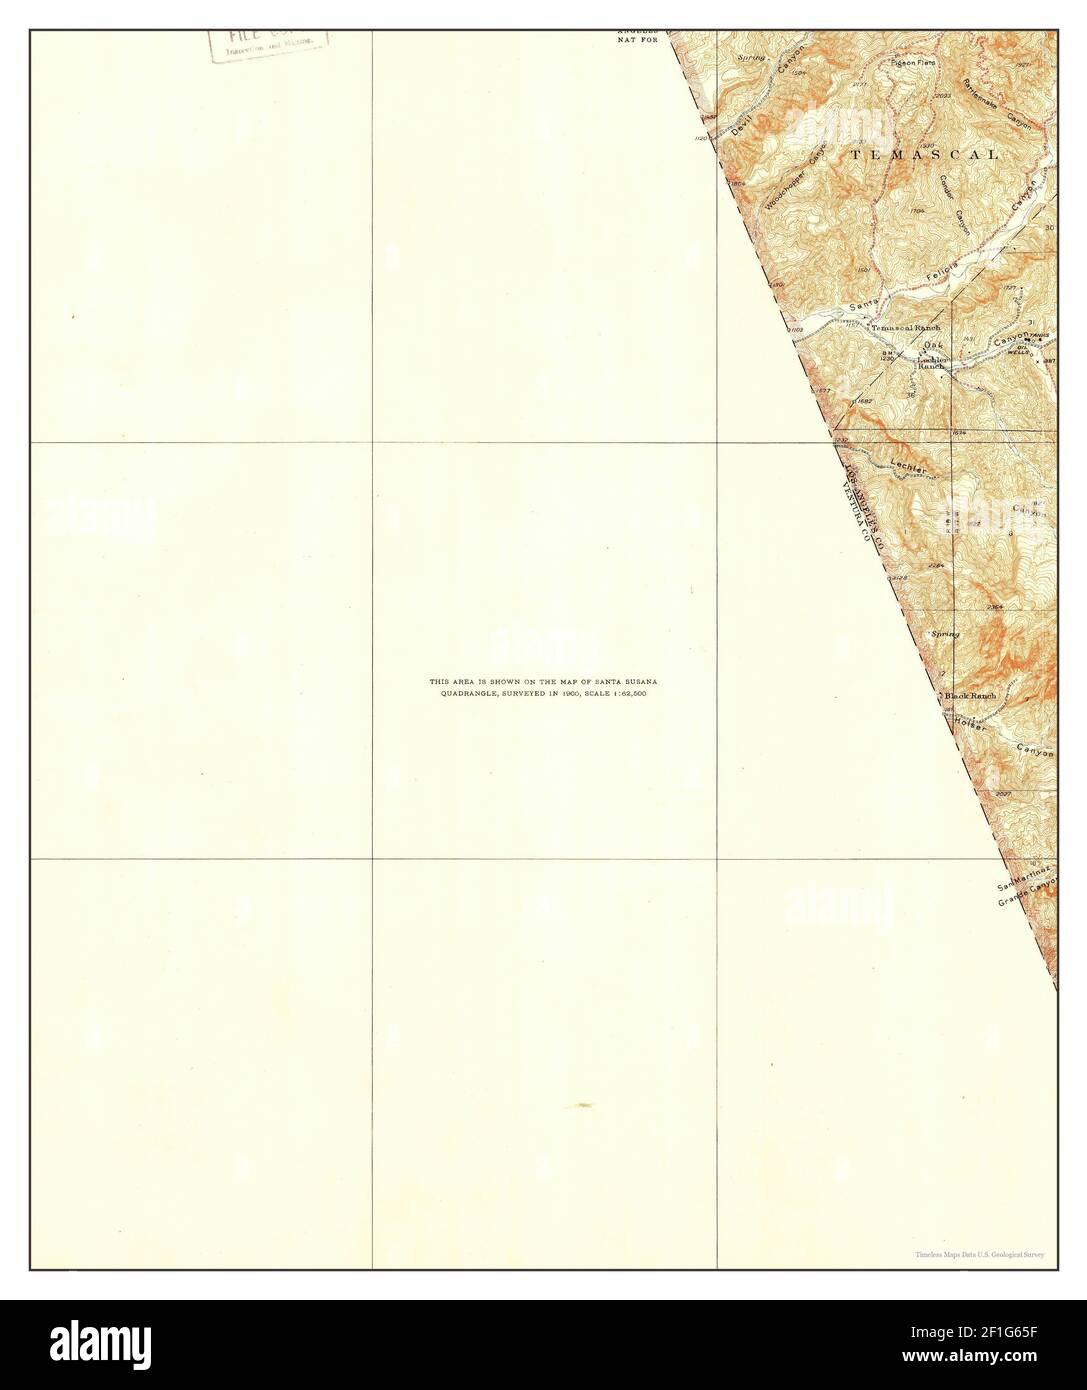 Santa Felicia Canyon, California, map 1935, 1:24000, United States of America by Timeless Maps, data U.S. Geological Survey Stock Photo